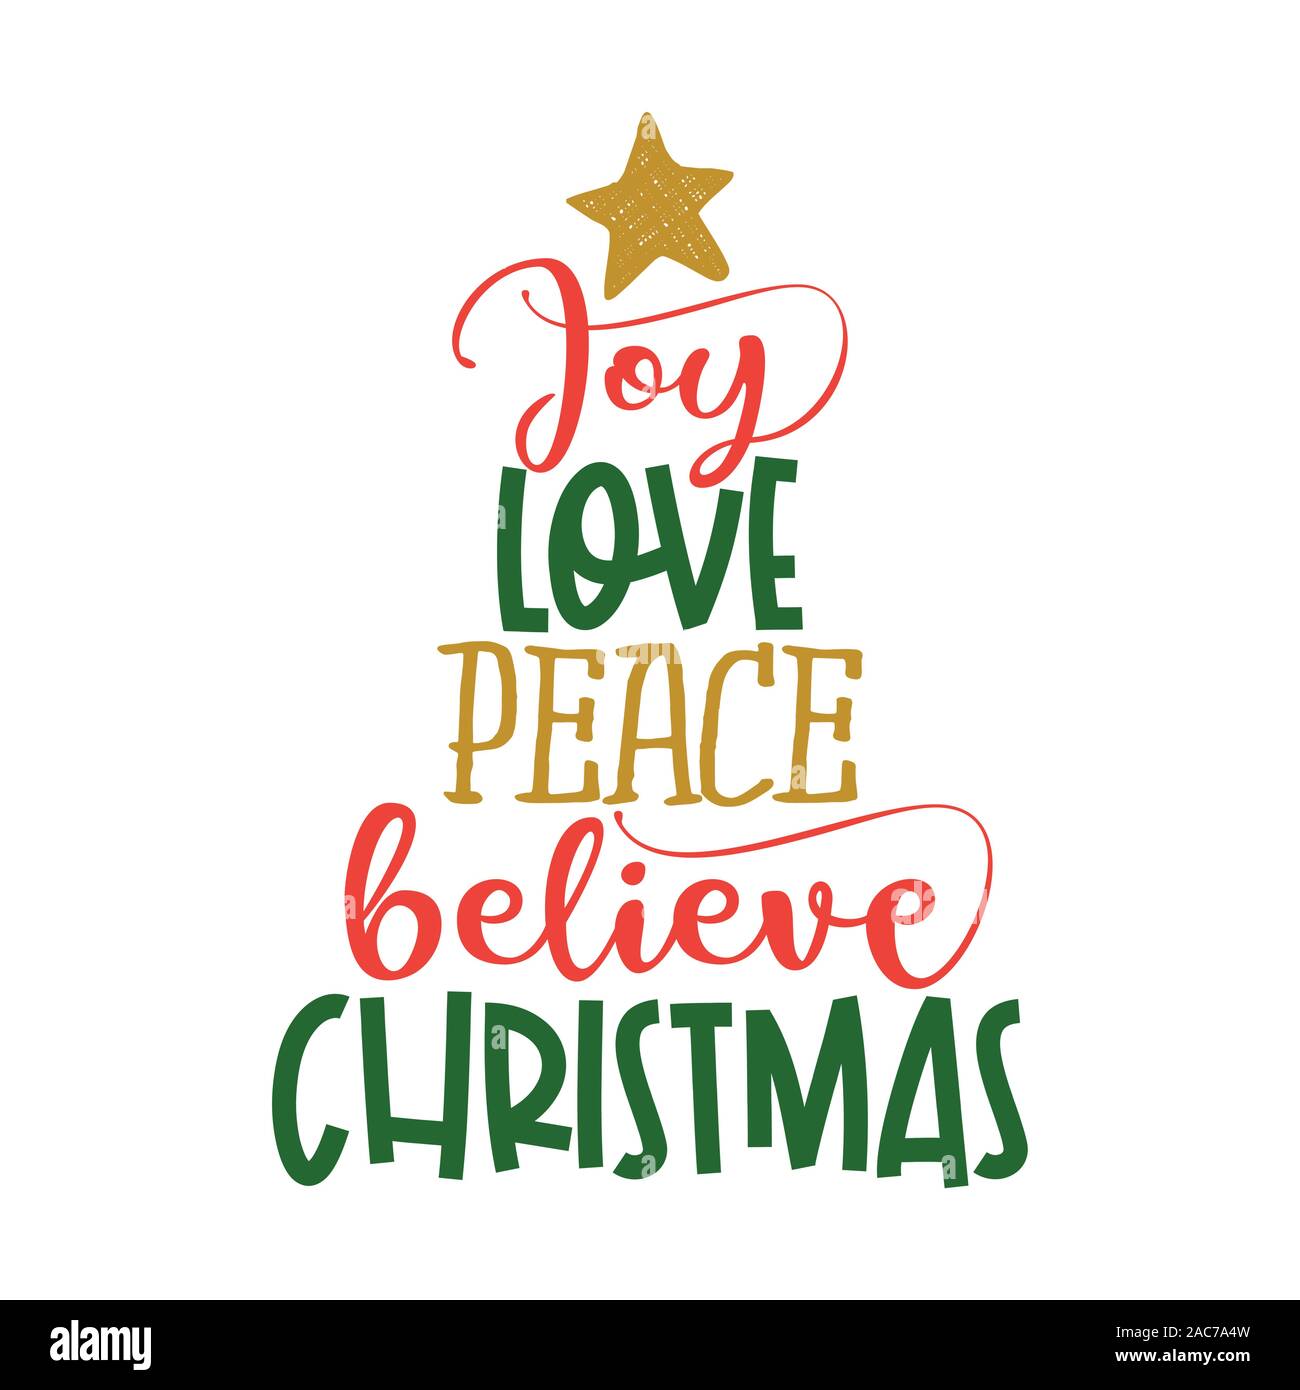 joy-love-peace-believe-christmas-calligraphy-phrase-hand-drawn